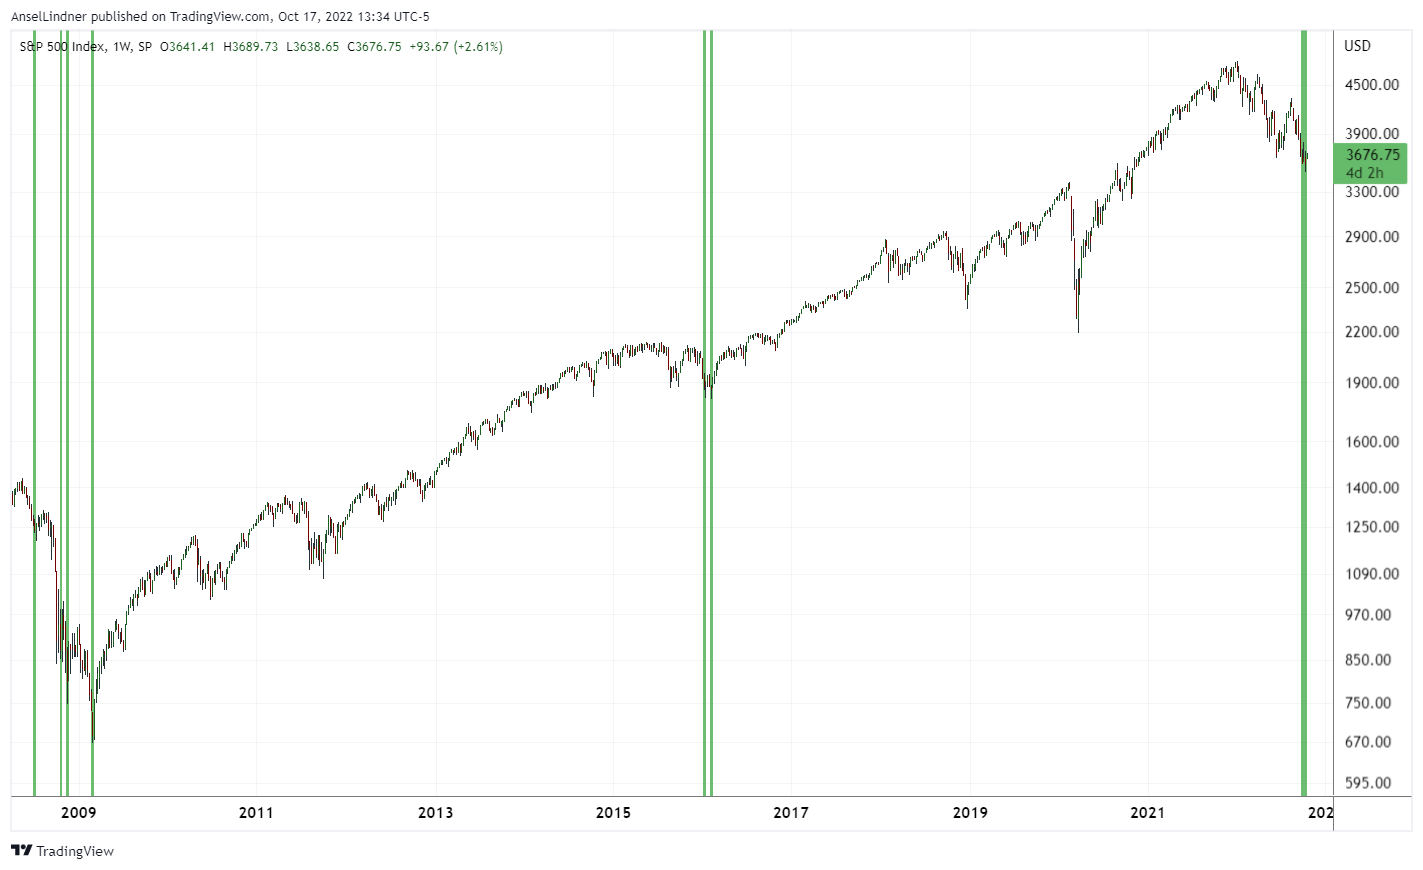 S&P 500 weekly bullish divergences, since 2008